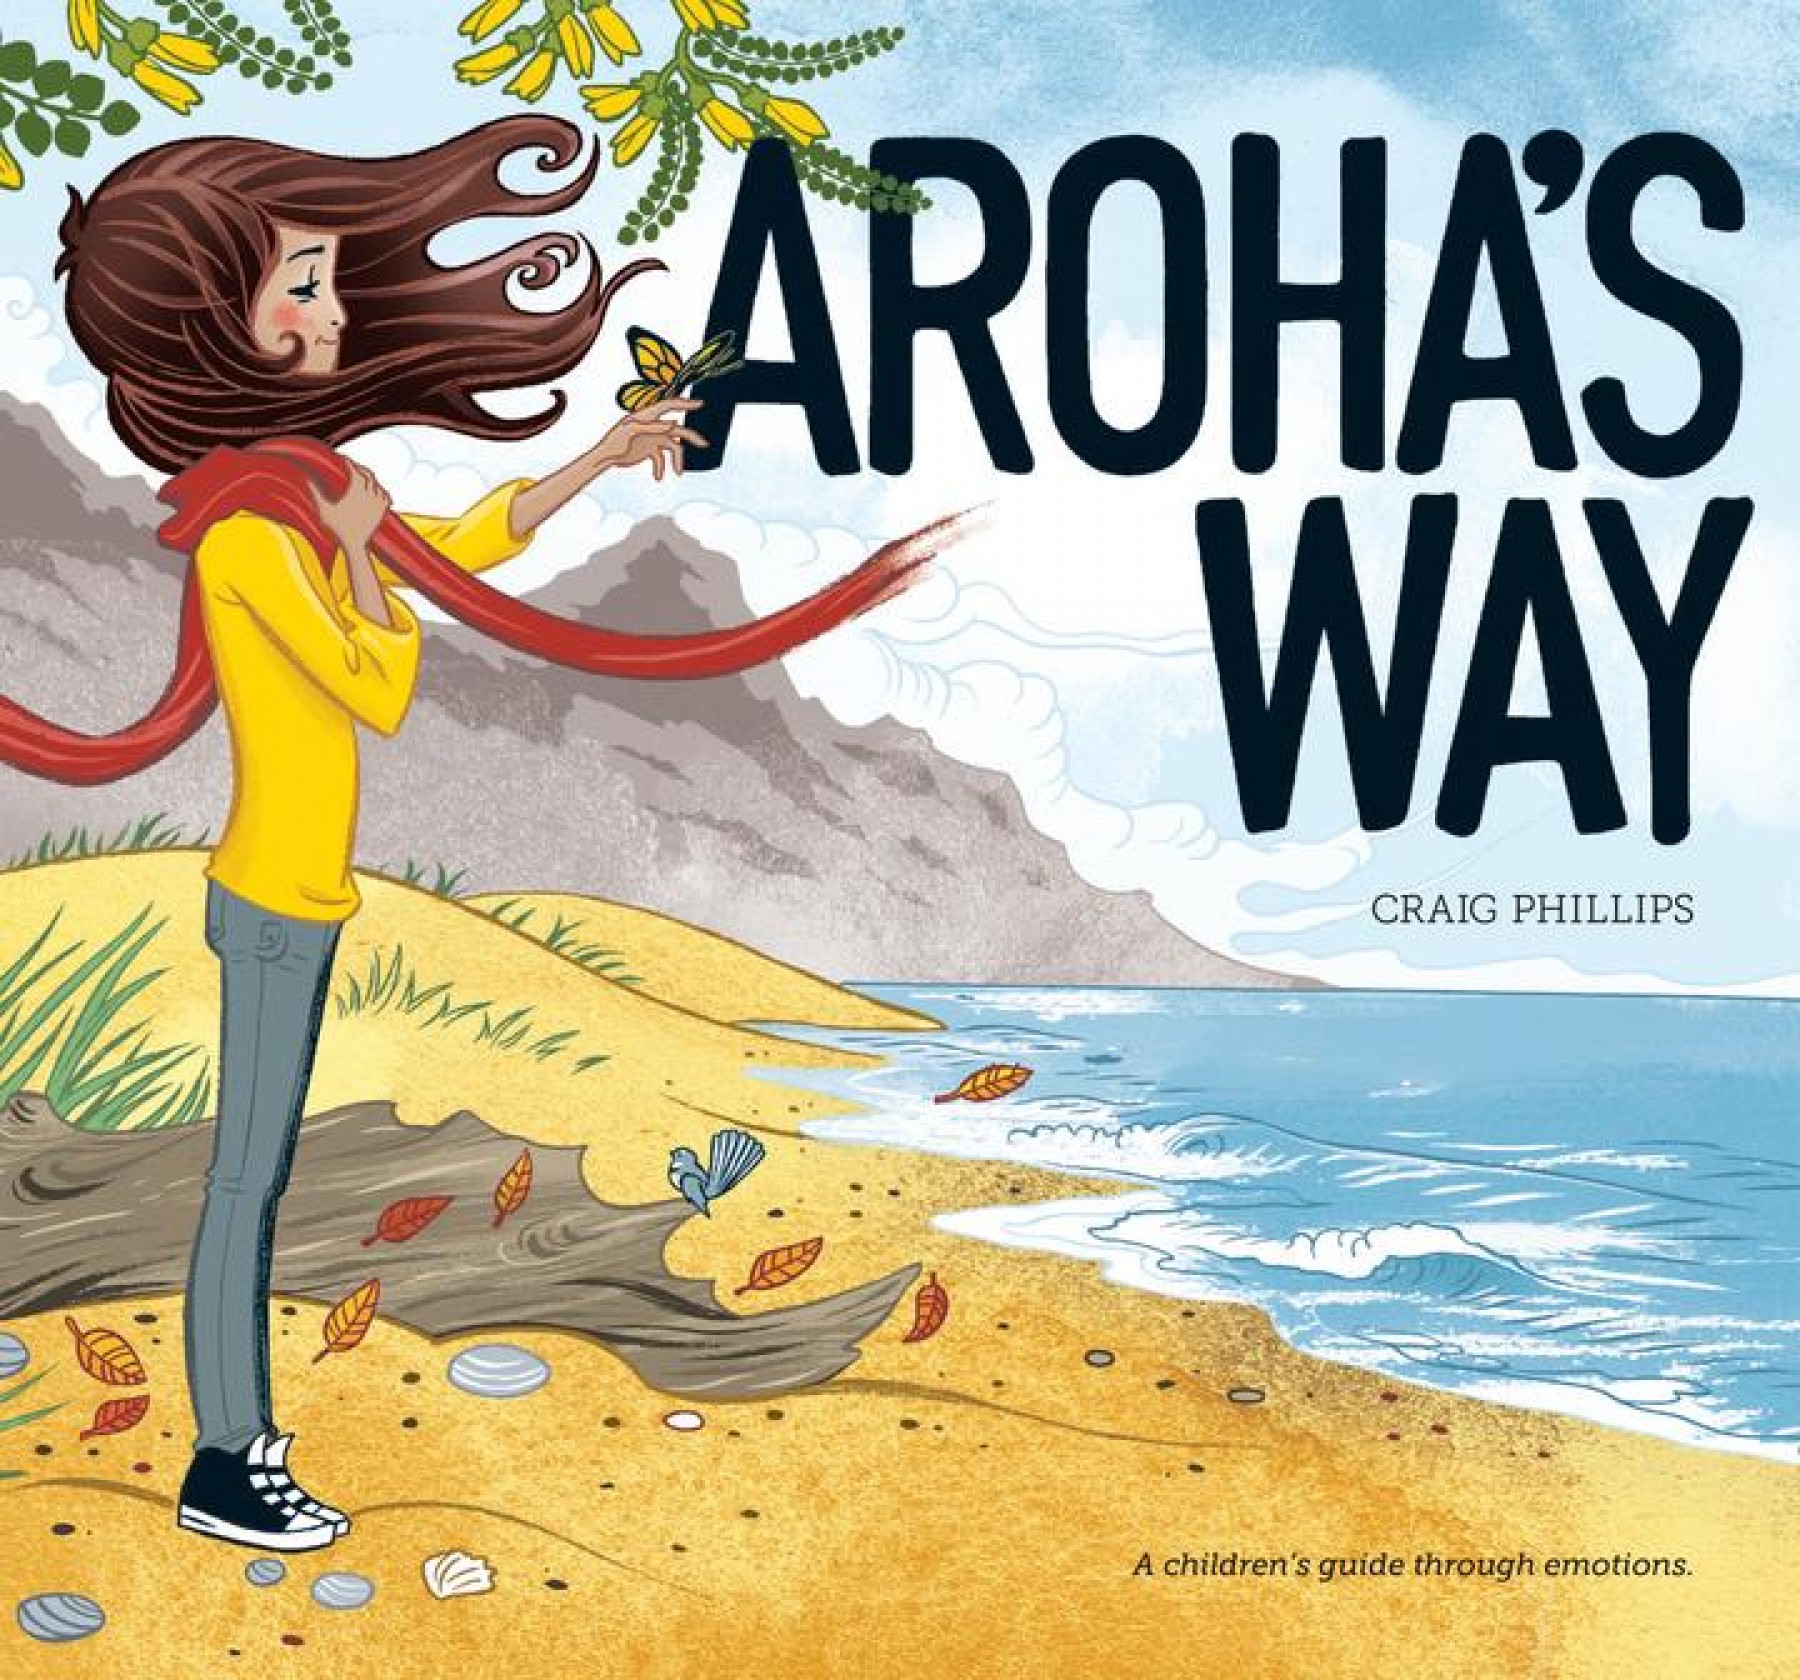 Aroha’s way: A children’s guide through emotions